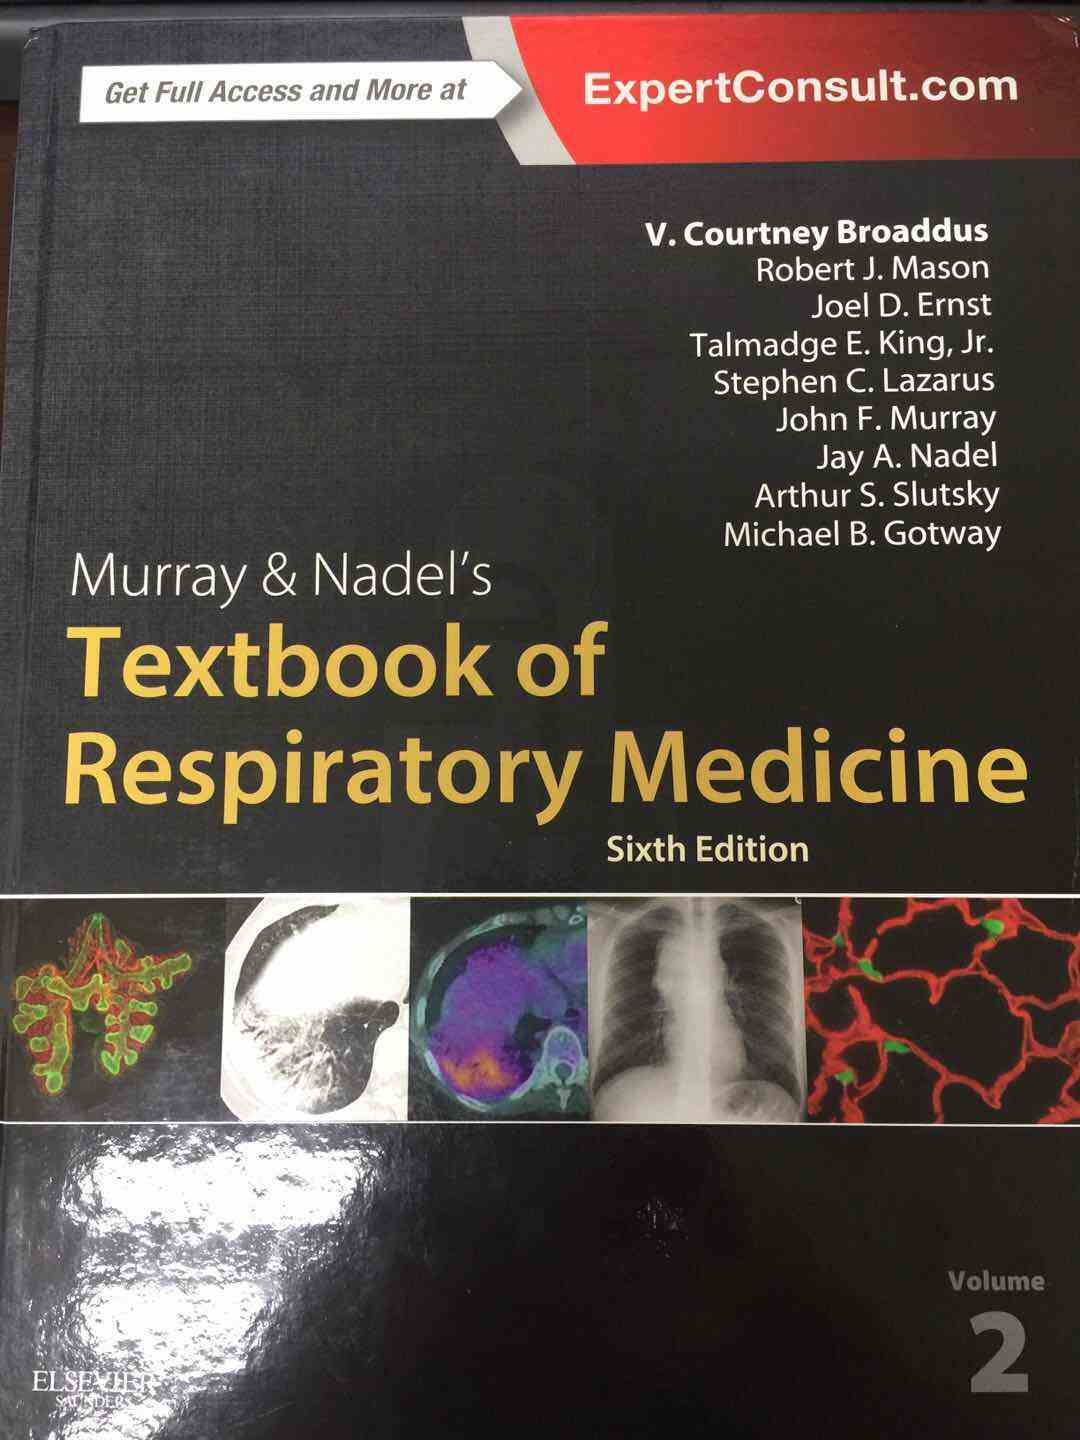 Textbook of Respiratory Medicine.jpg